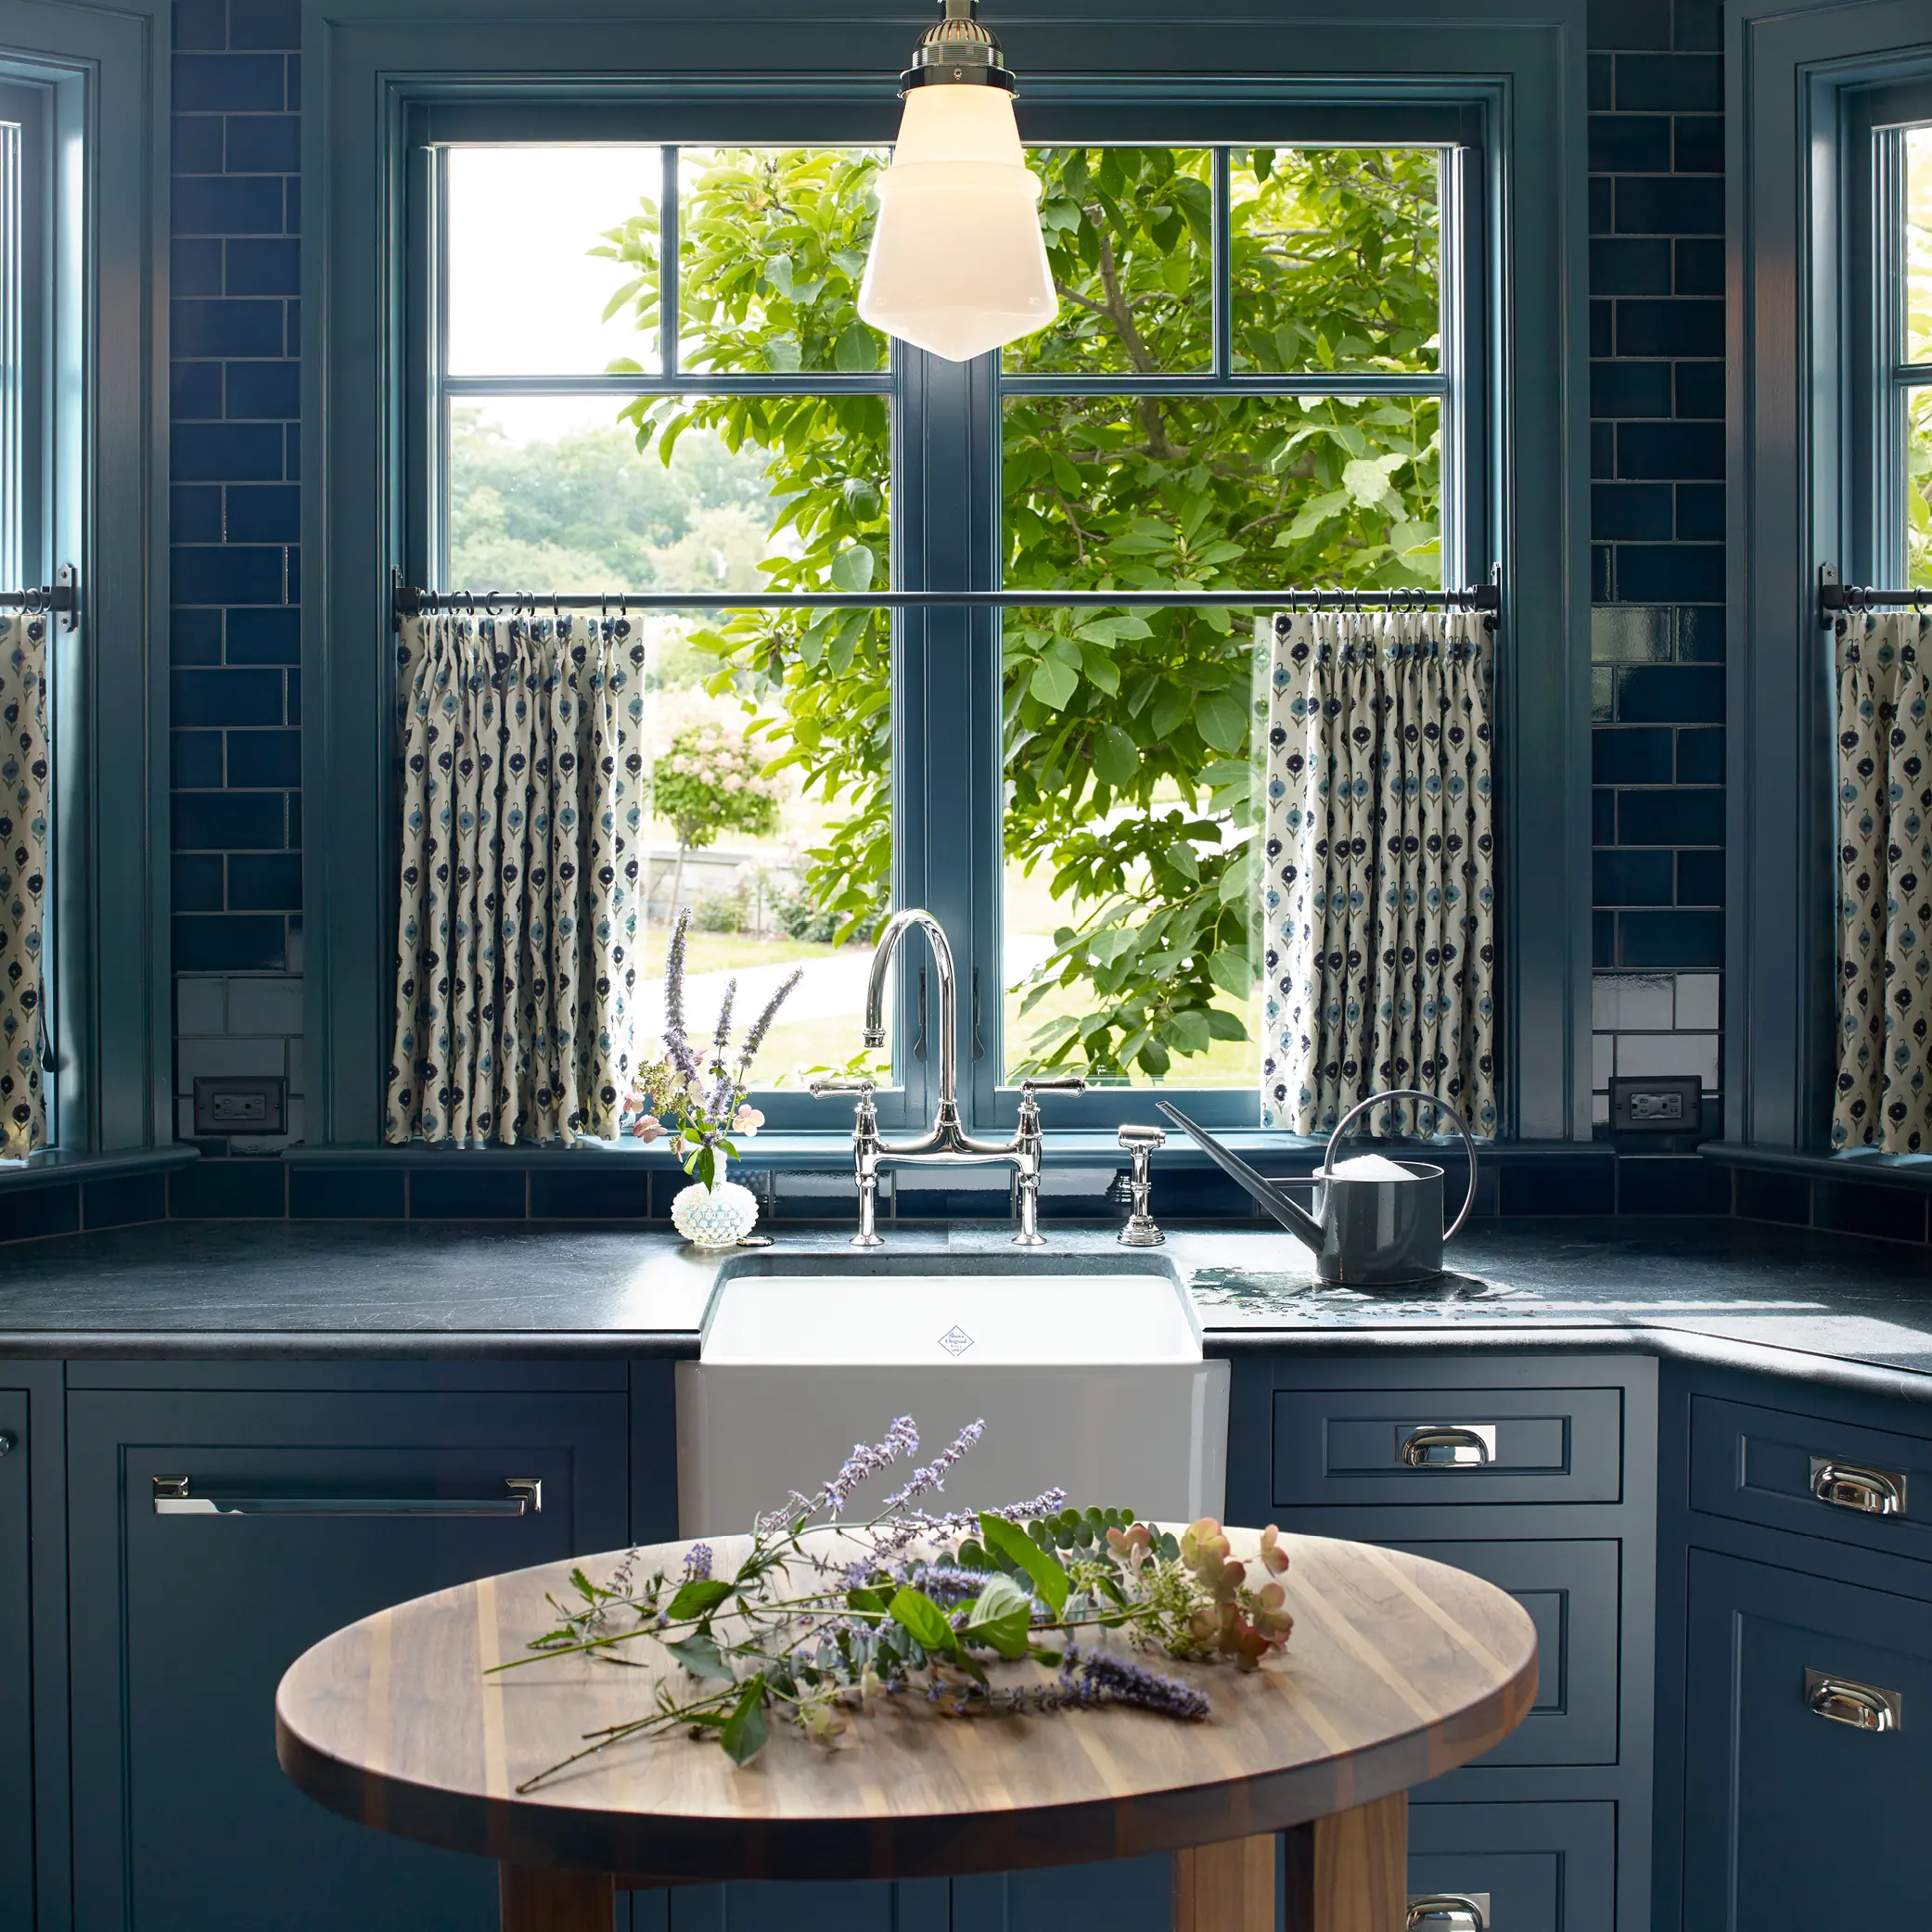 Blue tiled kitchen backsplash with farm sink and silver hardware